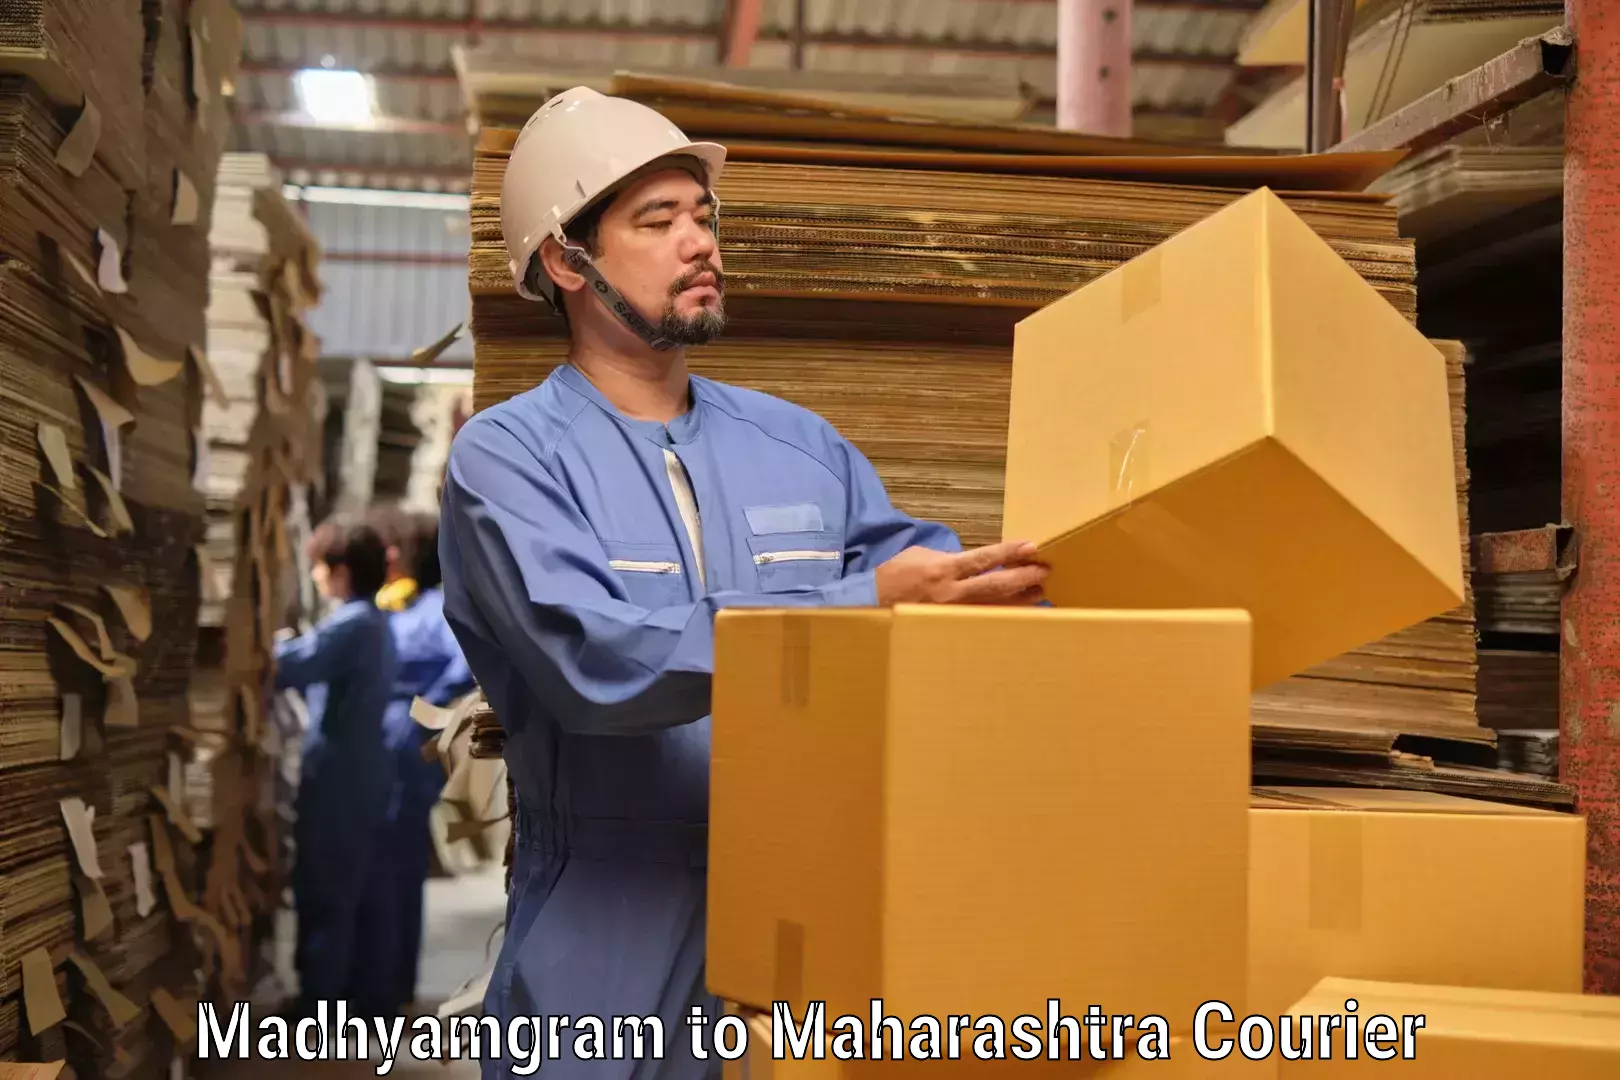 Courier service comparison Madhyamgram to Maharashtra